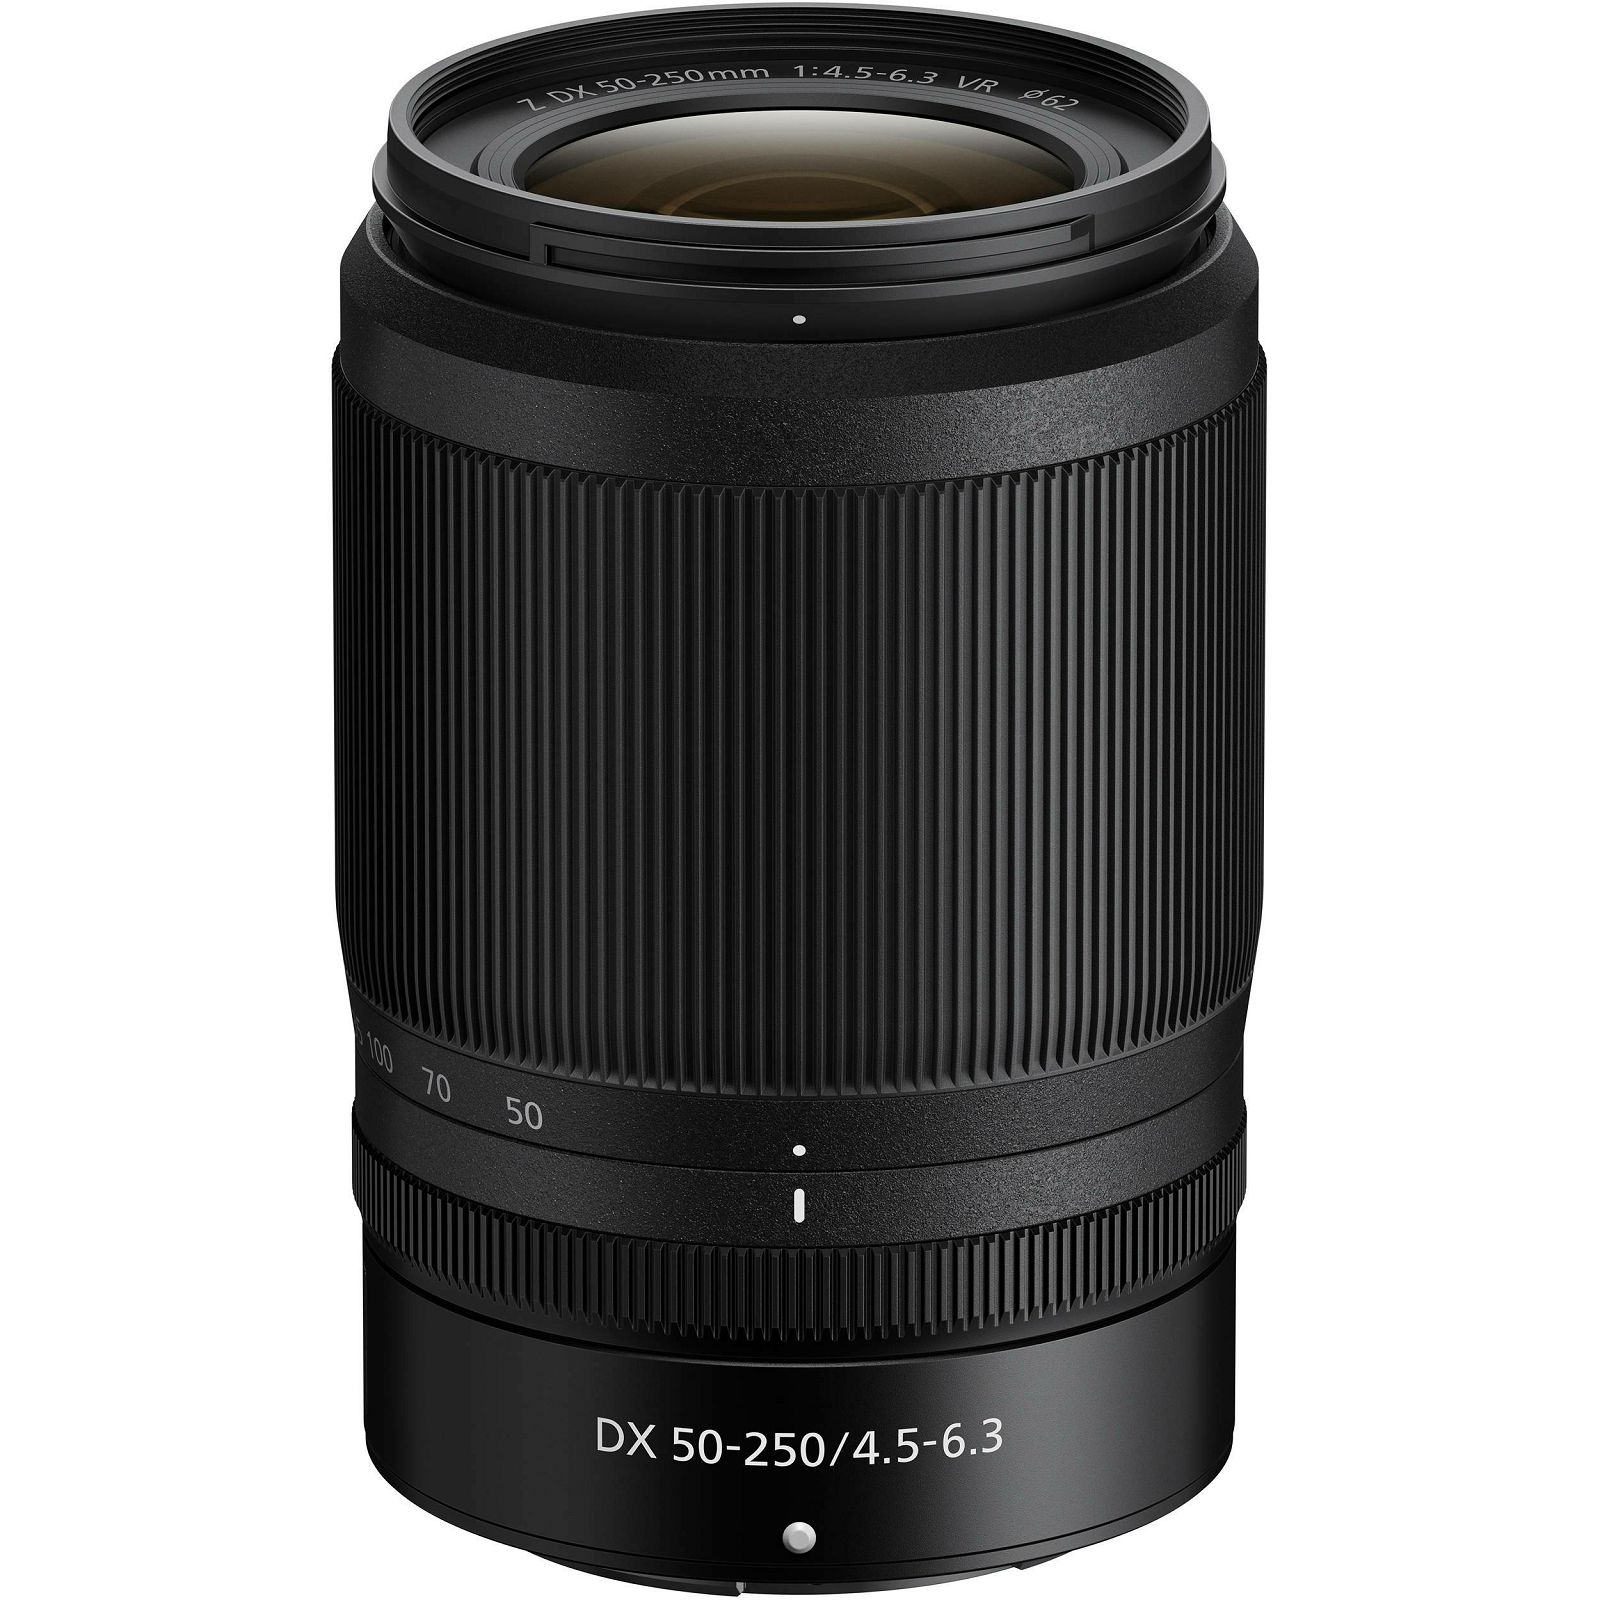 Nikon Z 50-250mm f/4.5-6.3 DX Nikkor telefoto objektiv (JMA707DA)